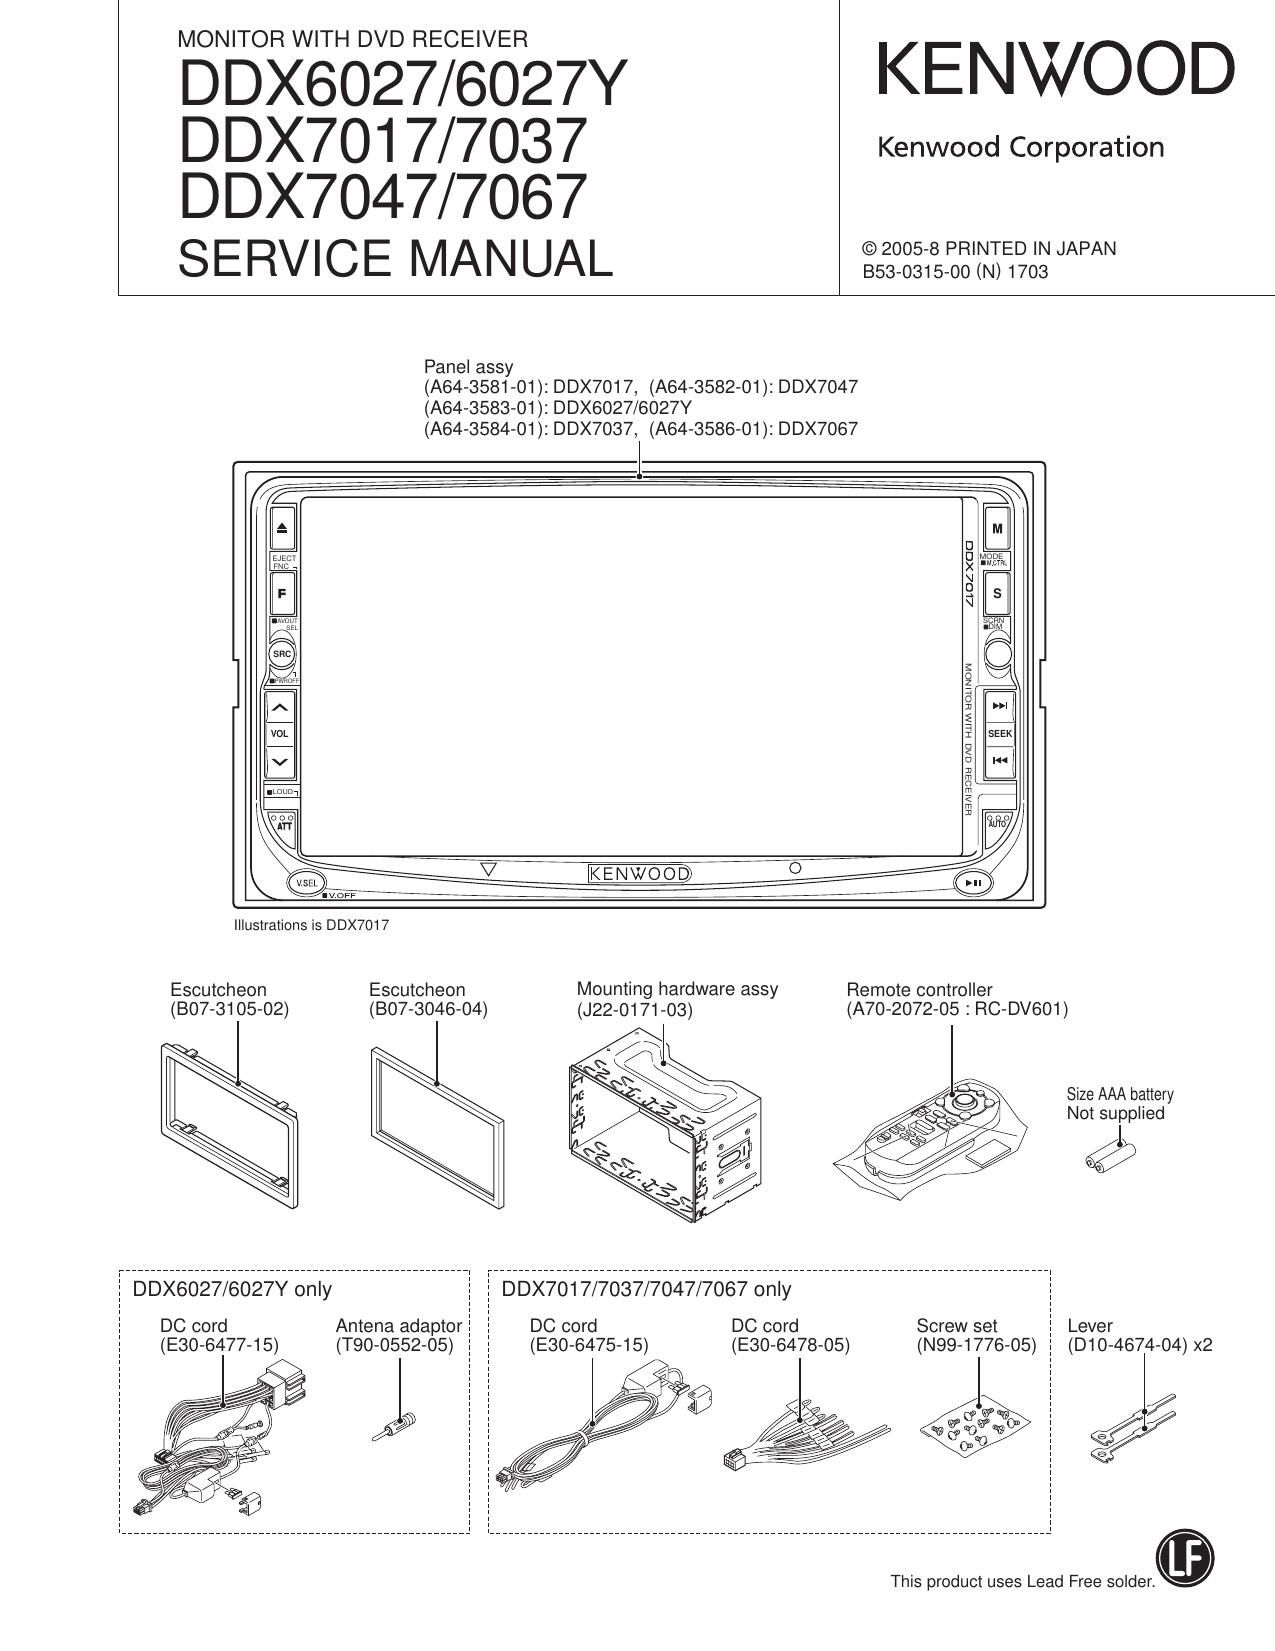 Kenwood DDX 7037 Service Manual